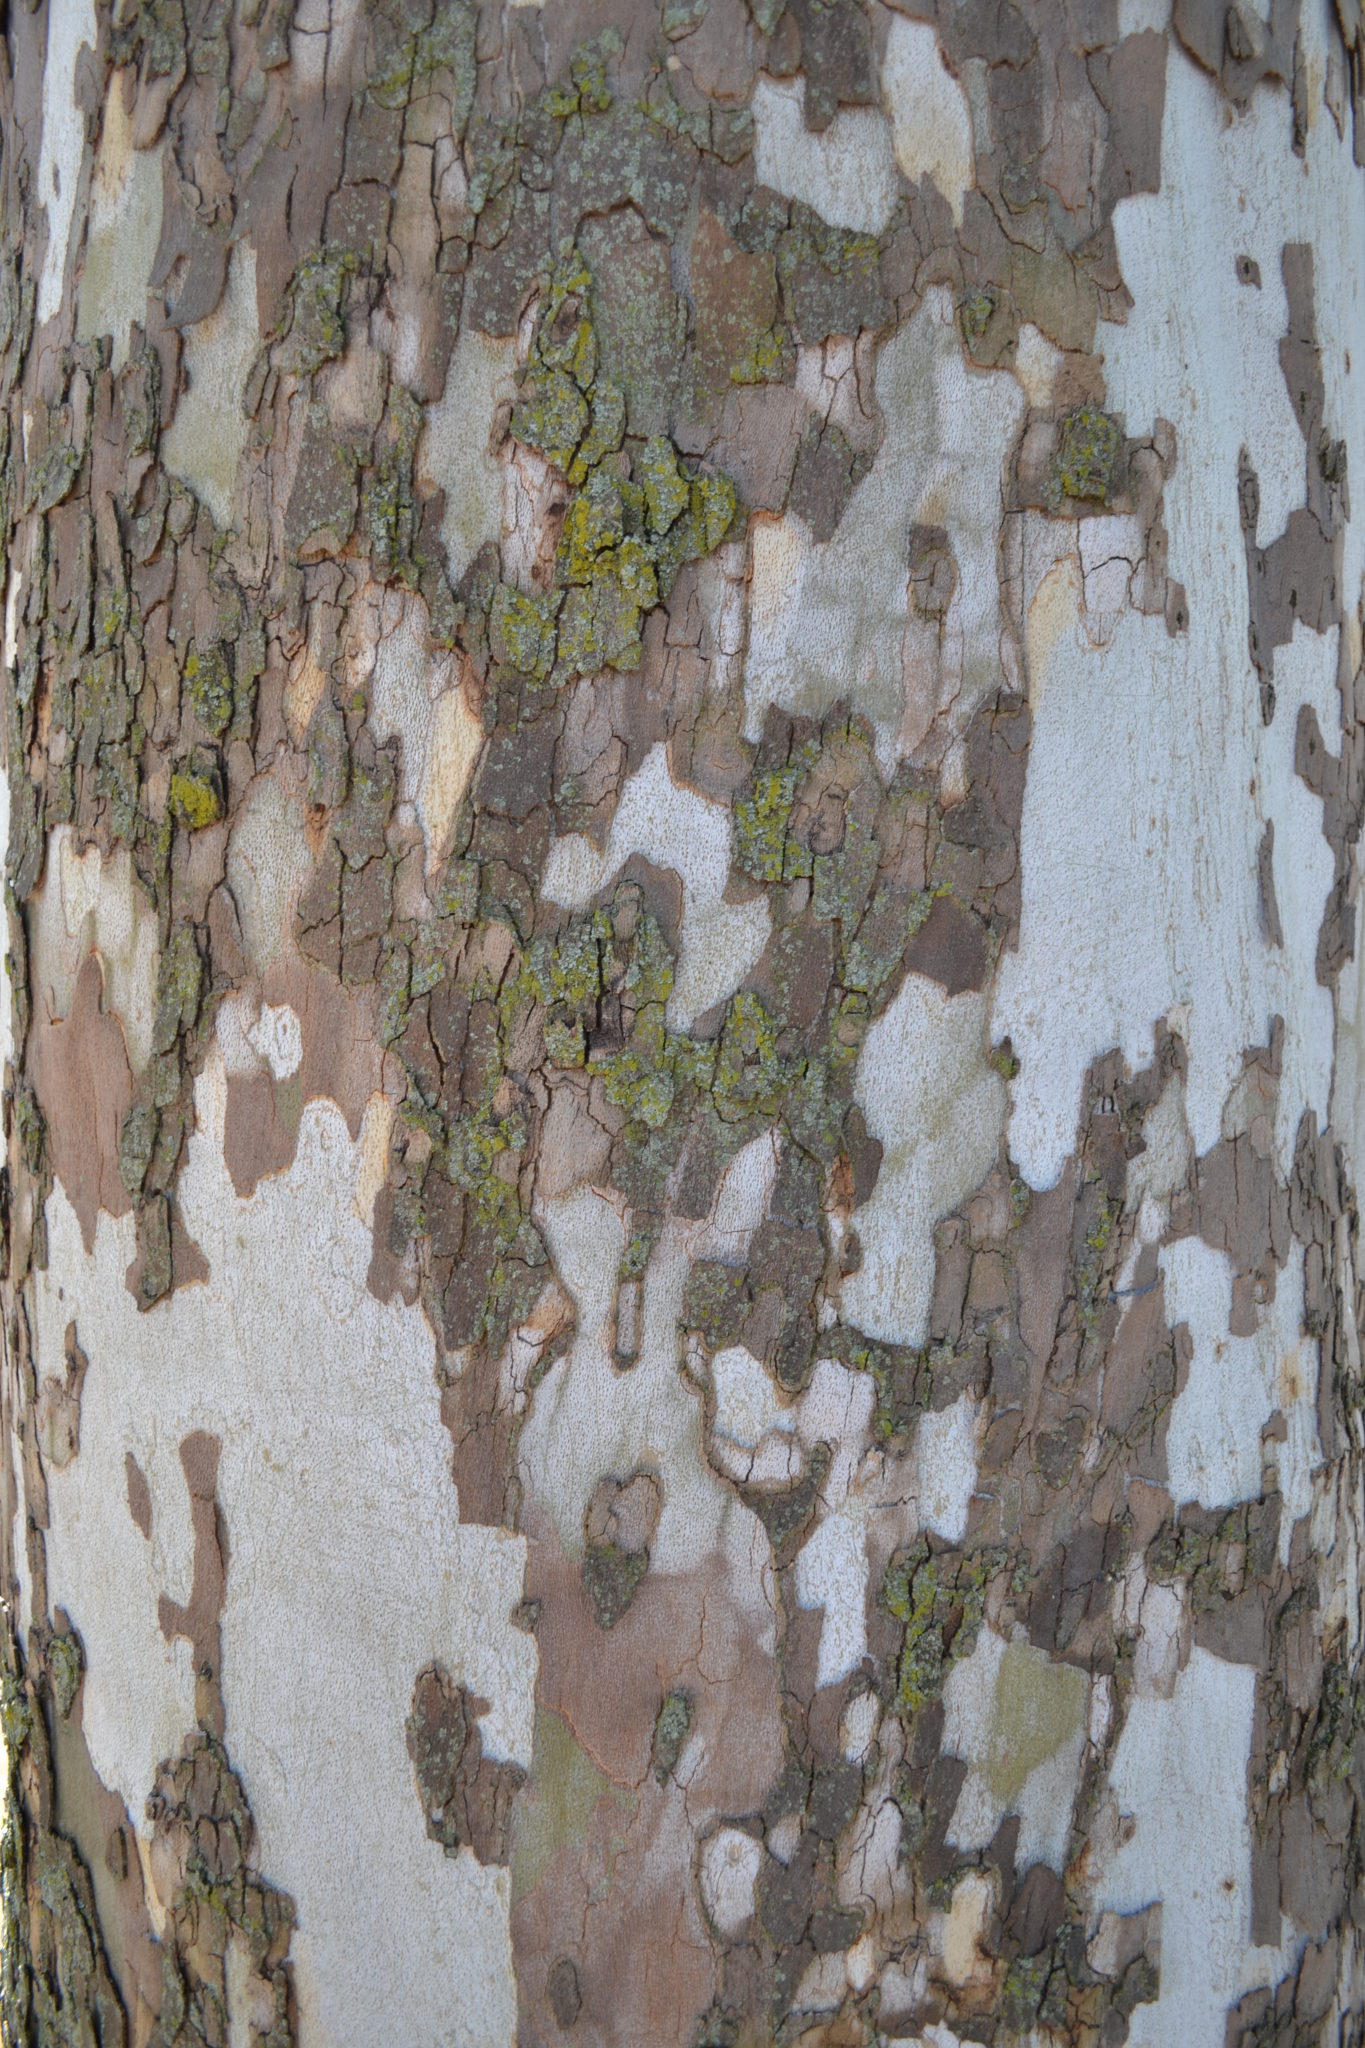 Peeling Sycamore Tree Bark Is Normal Purdue Landscape Report